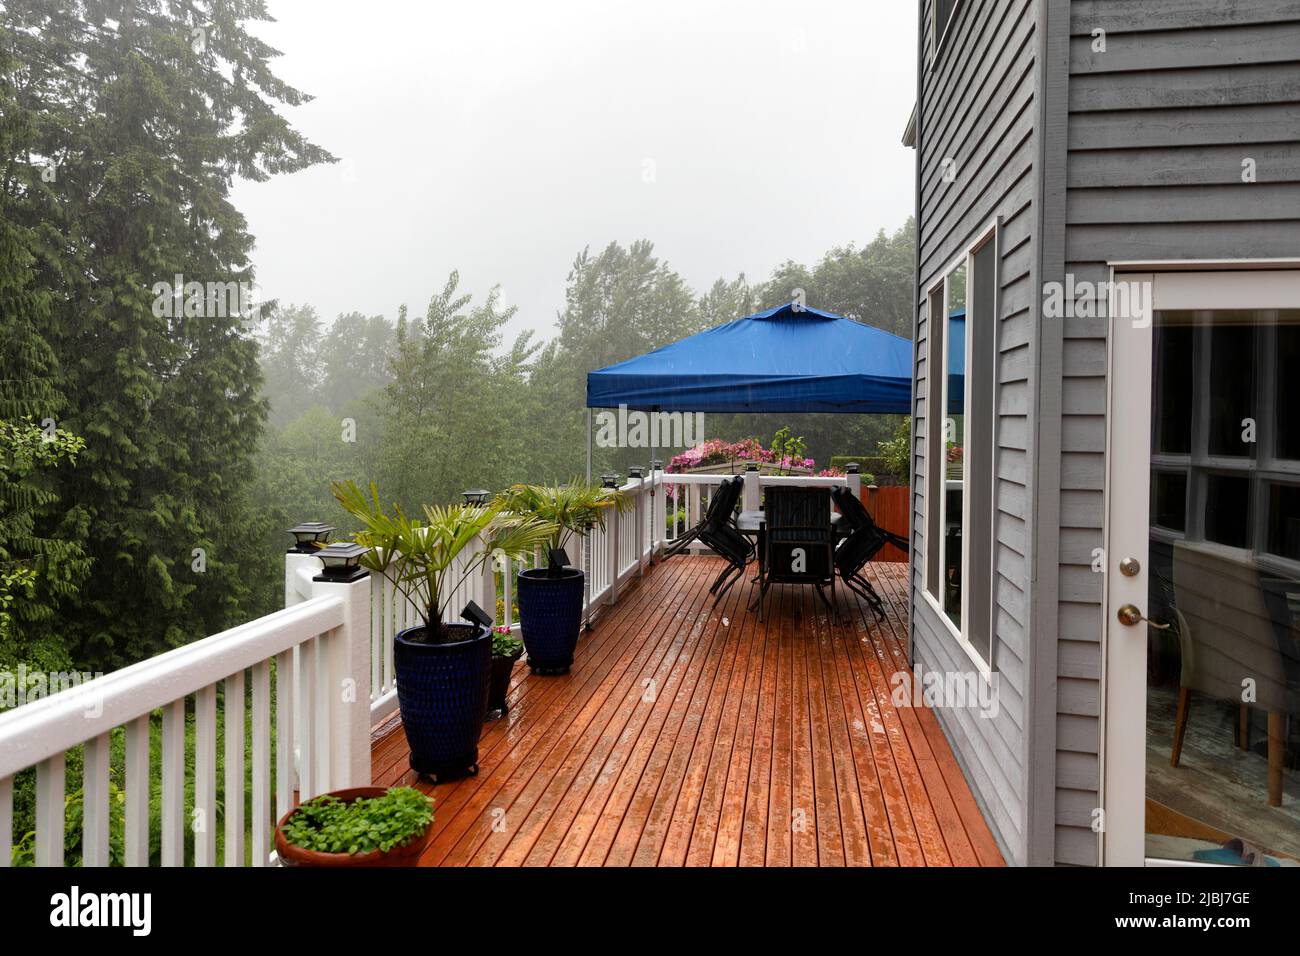 La tormenta fuerte de lluvia cancela la fiesta al aire libre en la terraza del patio trasero Foto de stock